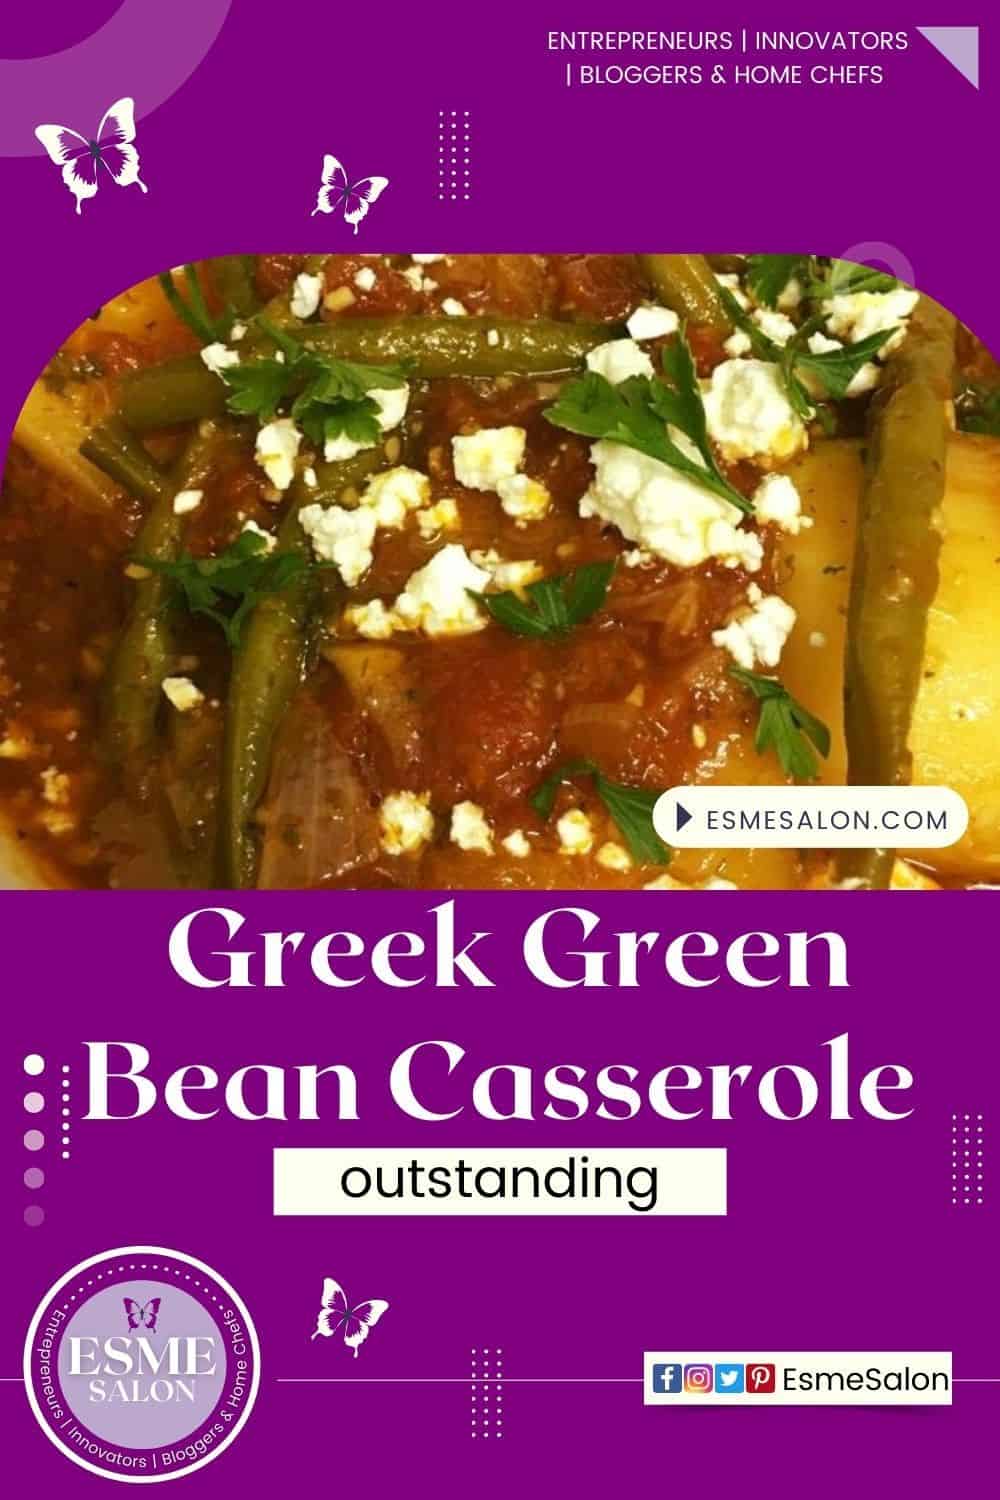 an image of a Greek Green Bean Casserole with feta crumbs